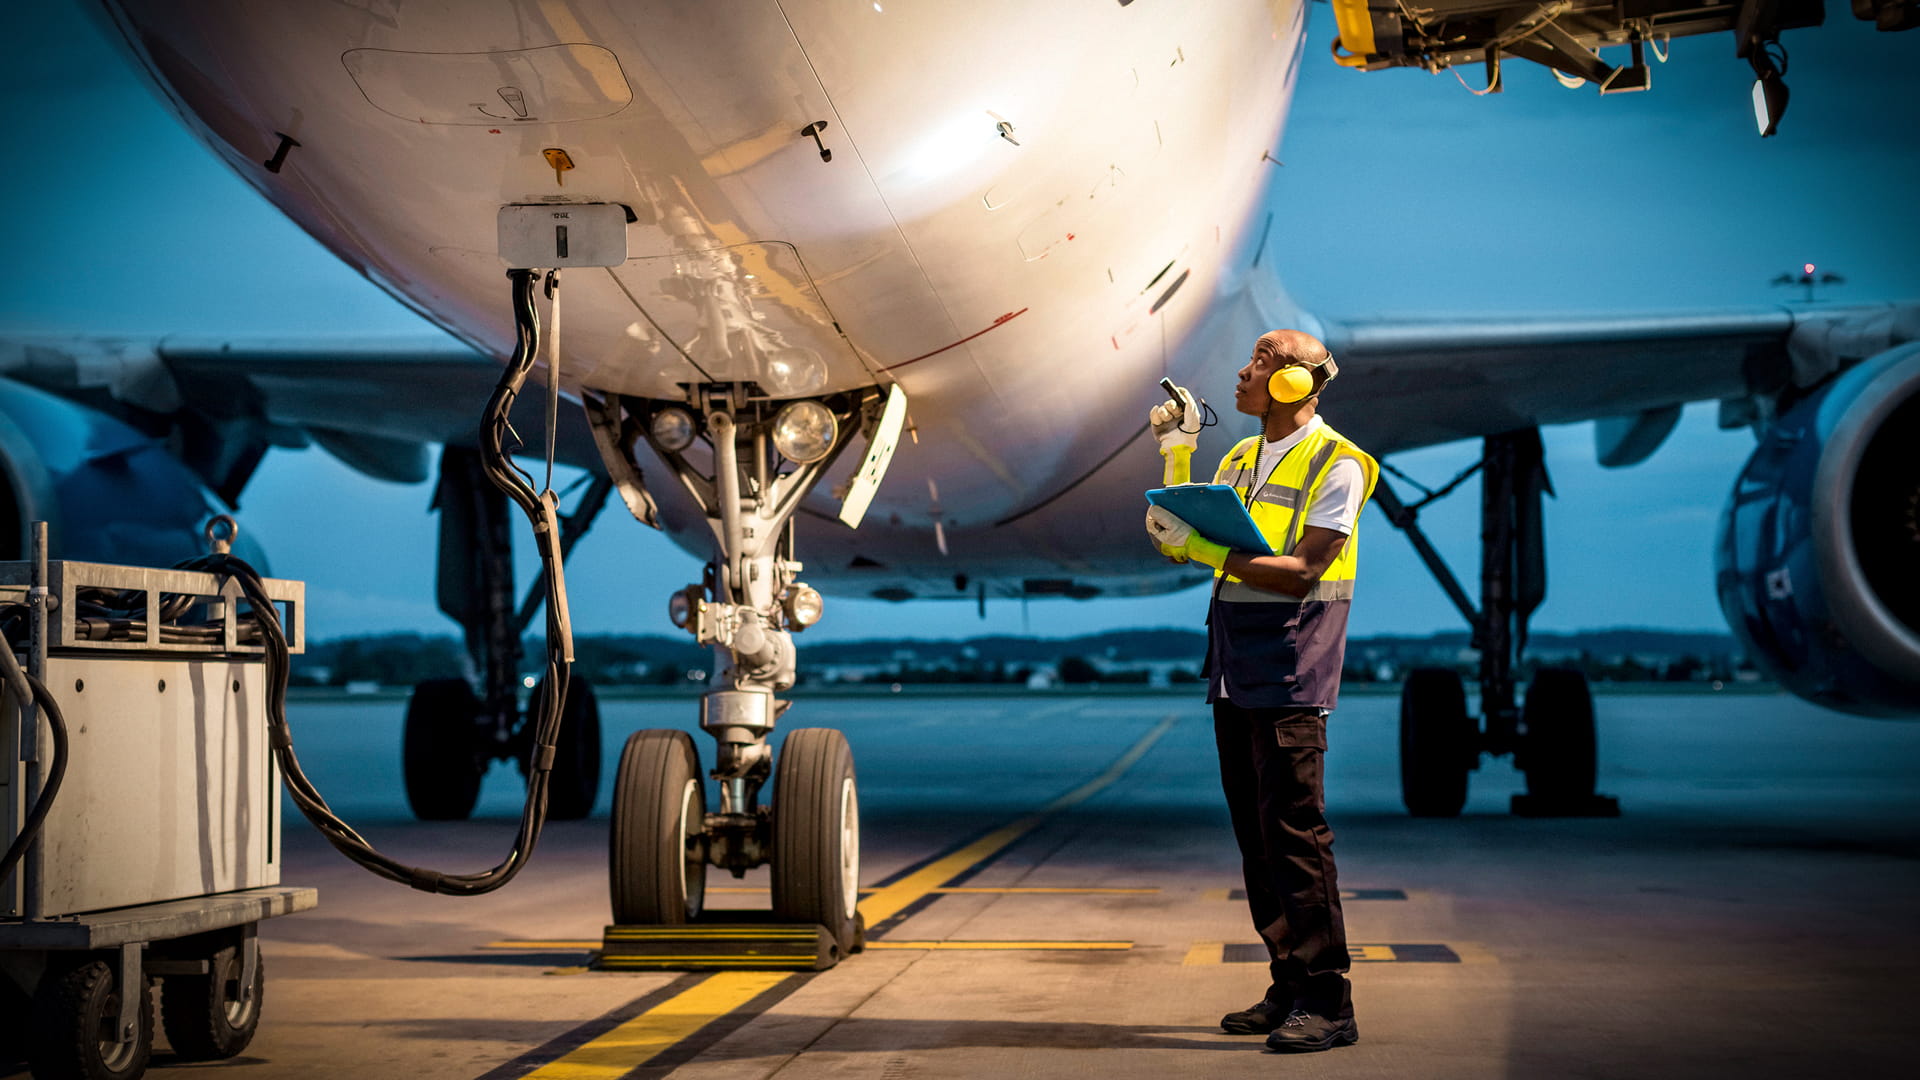 Maintenance technician performing diagnostics on an aircraft